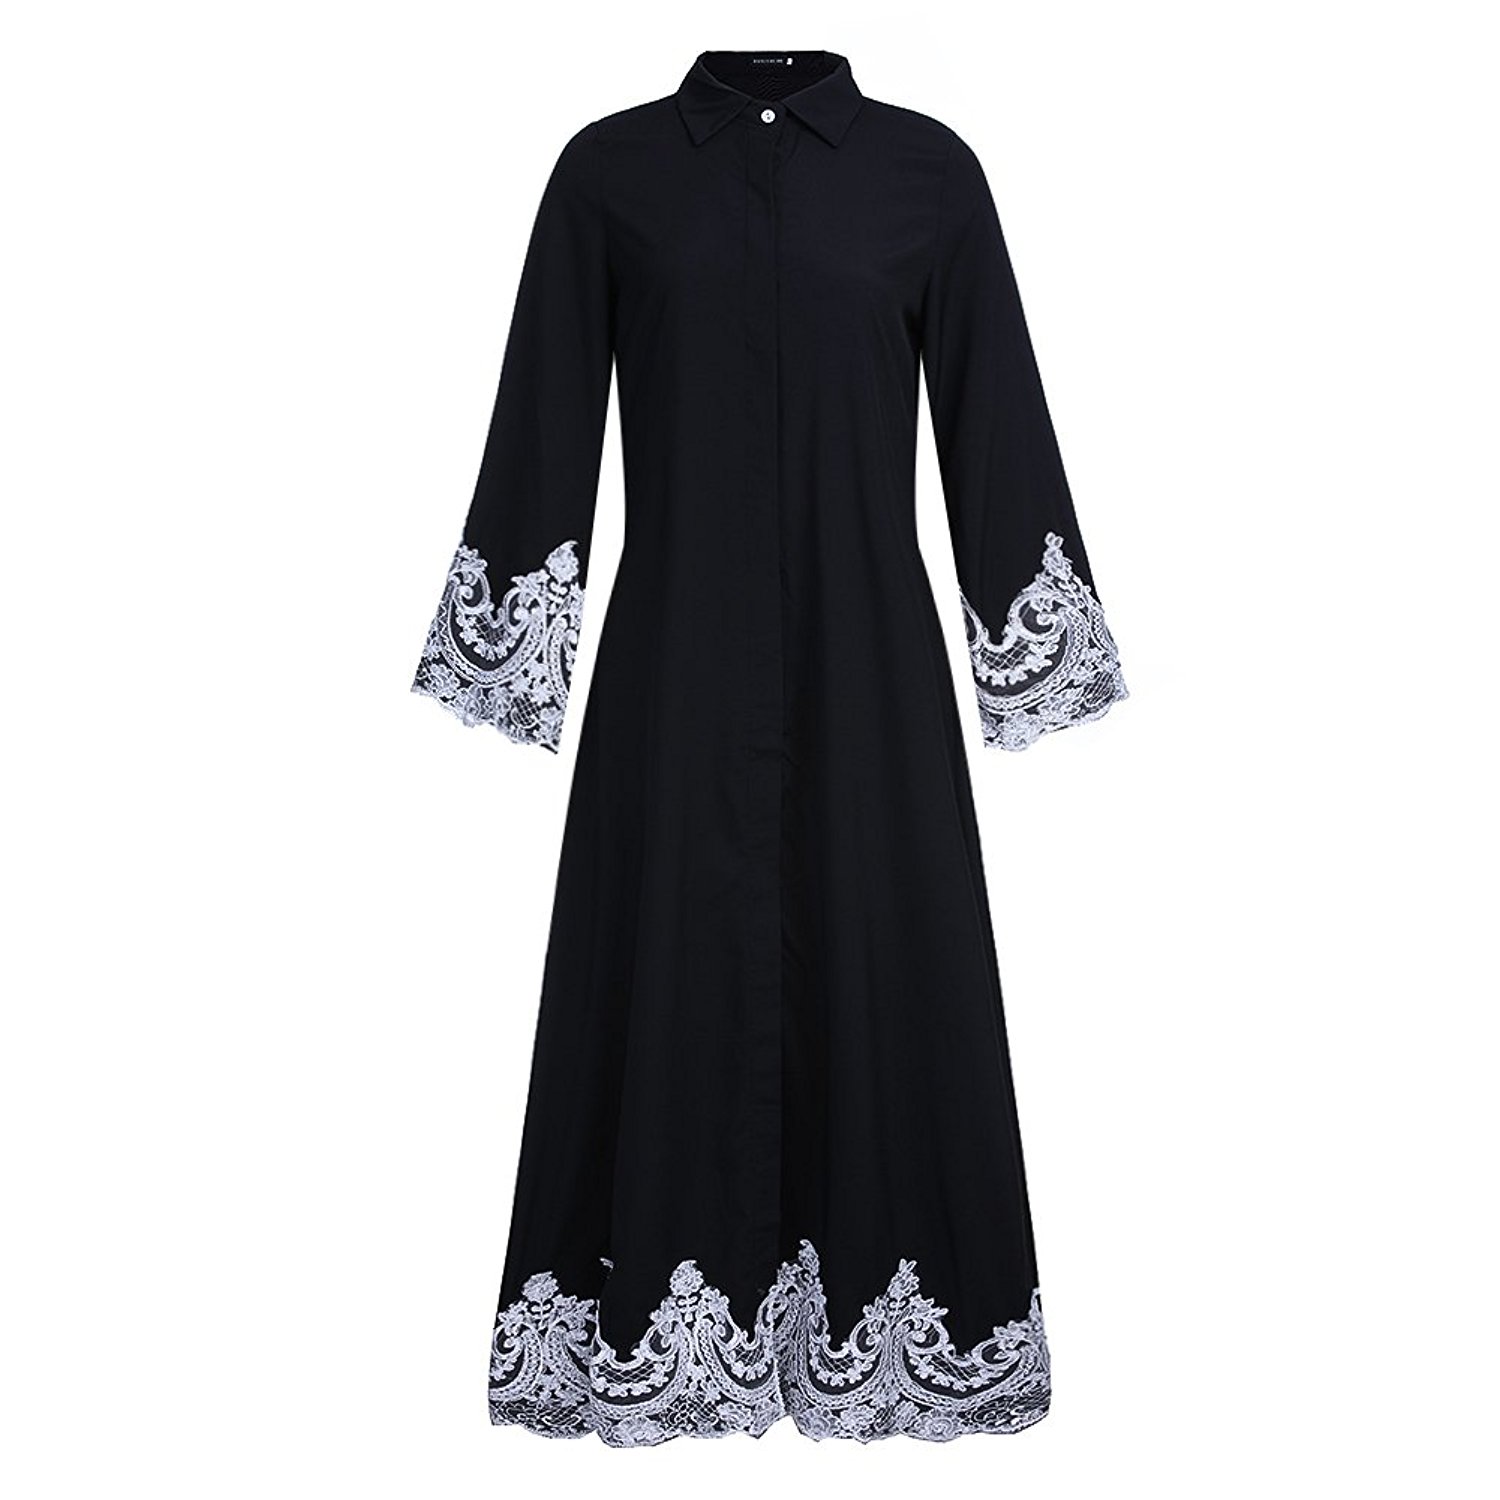 Fancyqube Womens Elegant Muslim Kaftan Dubai Islamic Abayas Long Sleeve A Line Maxi Dress